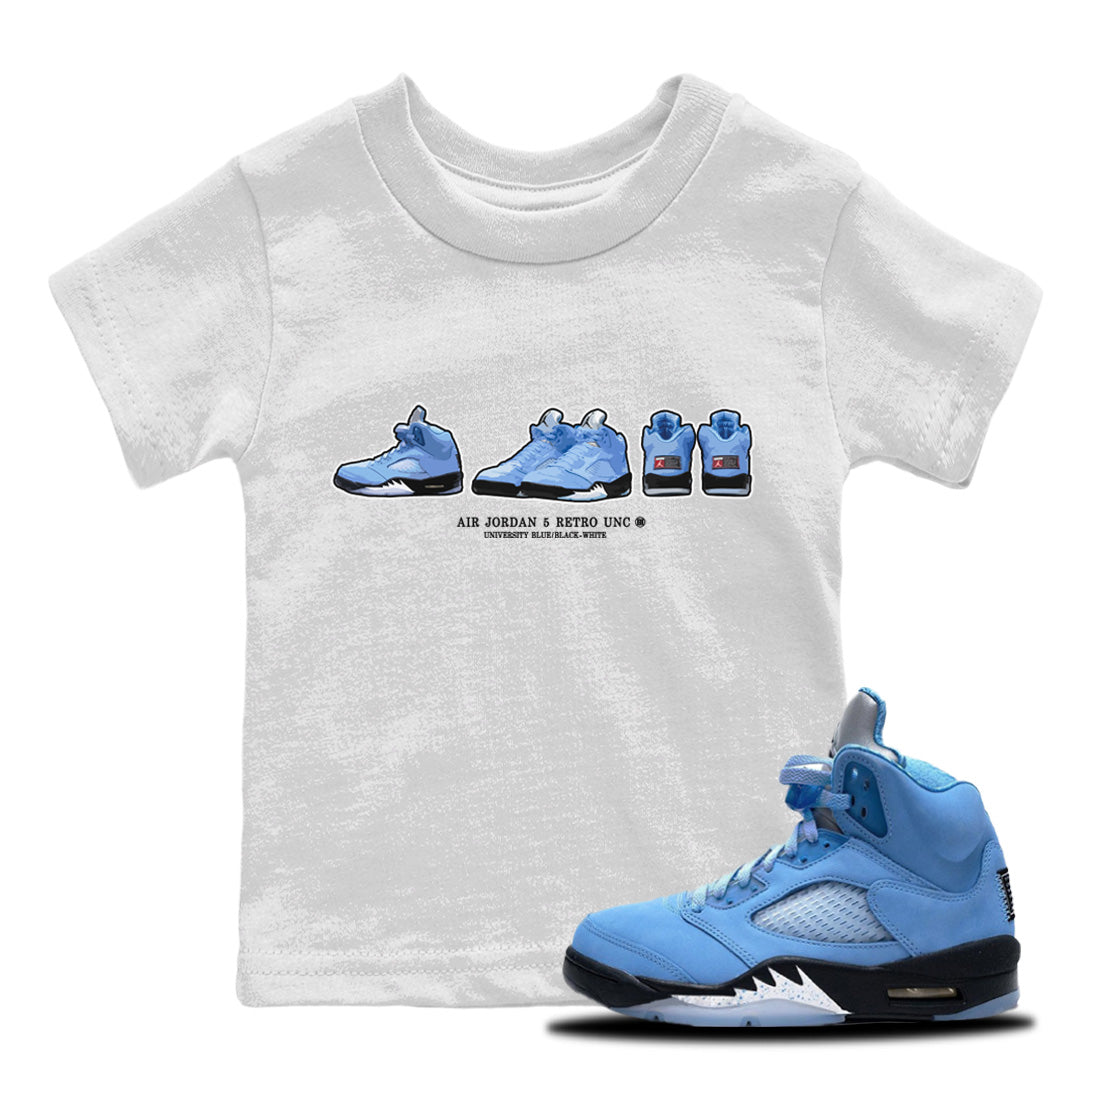 Air Jordan 5 UNC Shirt To Match Jordans Sneaker Prelude Sneaker Tees Air Jordan 5 Retro UNC Drip Gear Zone Sneaker Matching Clothing Kids Shirts White 1